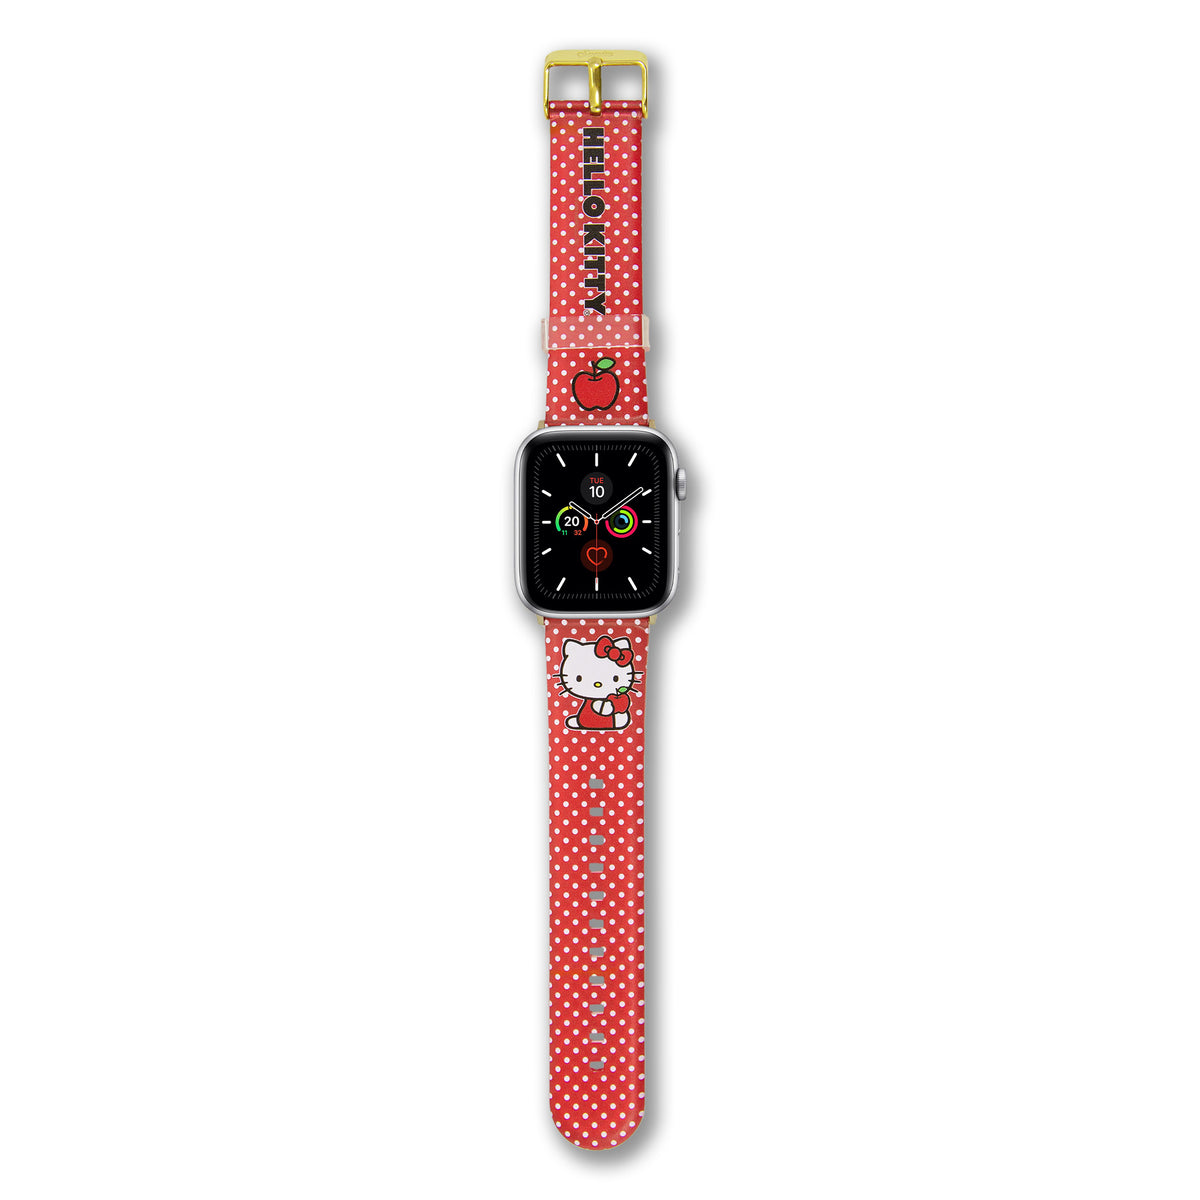 Hello Kitty x Sonix Apples Jelly Apple Watch Band Accessory BySonix Inc.   